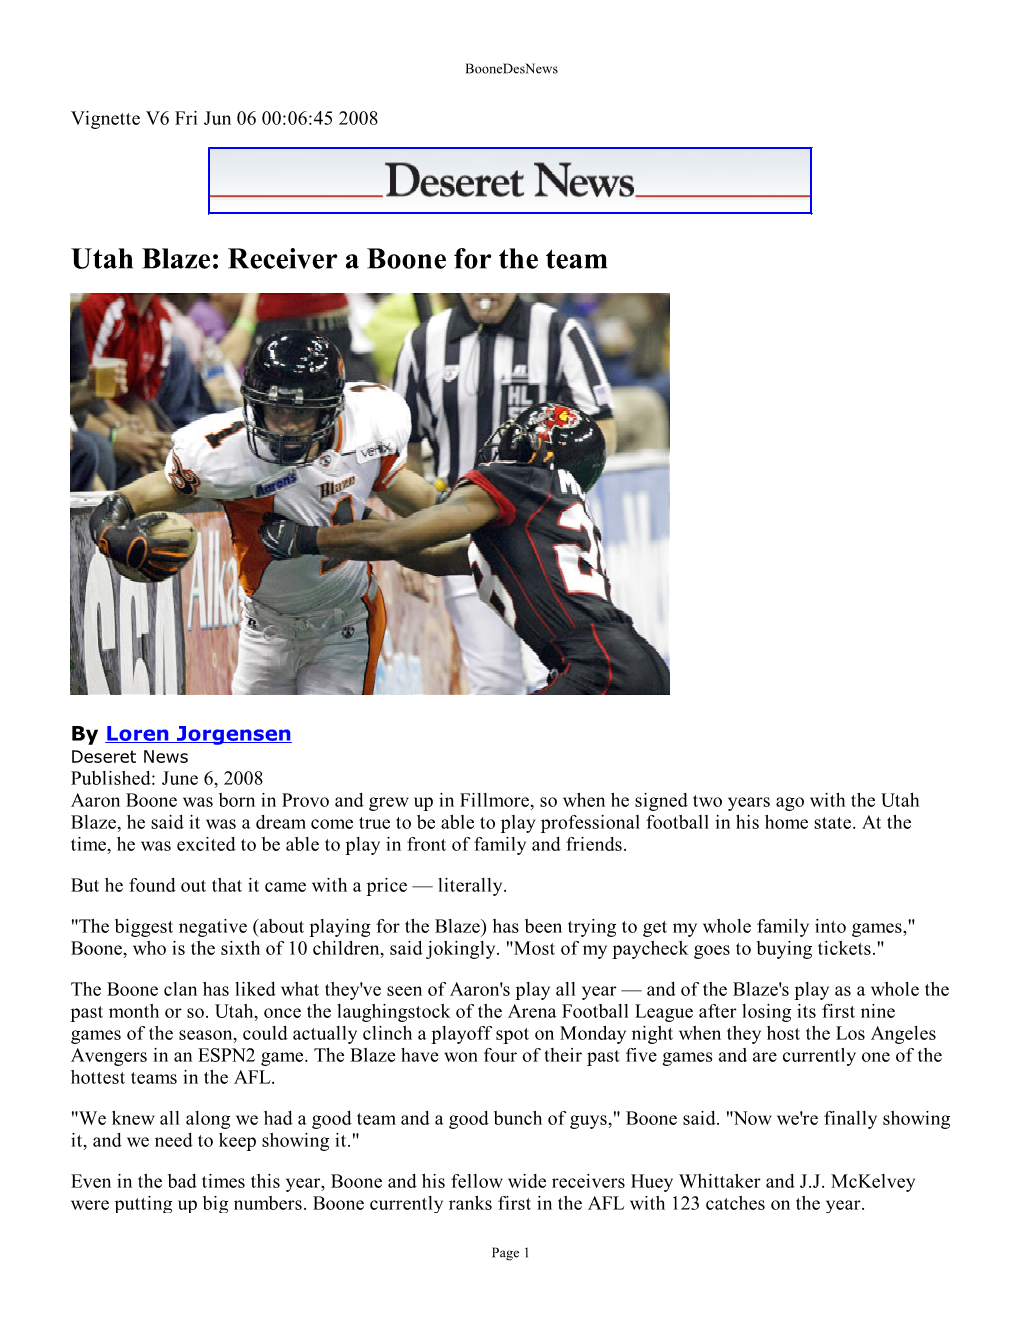 Utah Blaze: Receiver a Boone for the Team